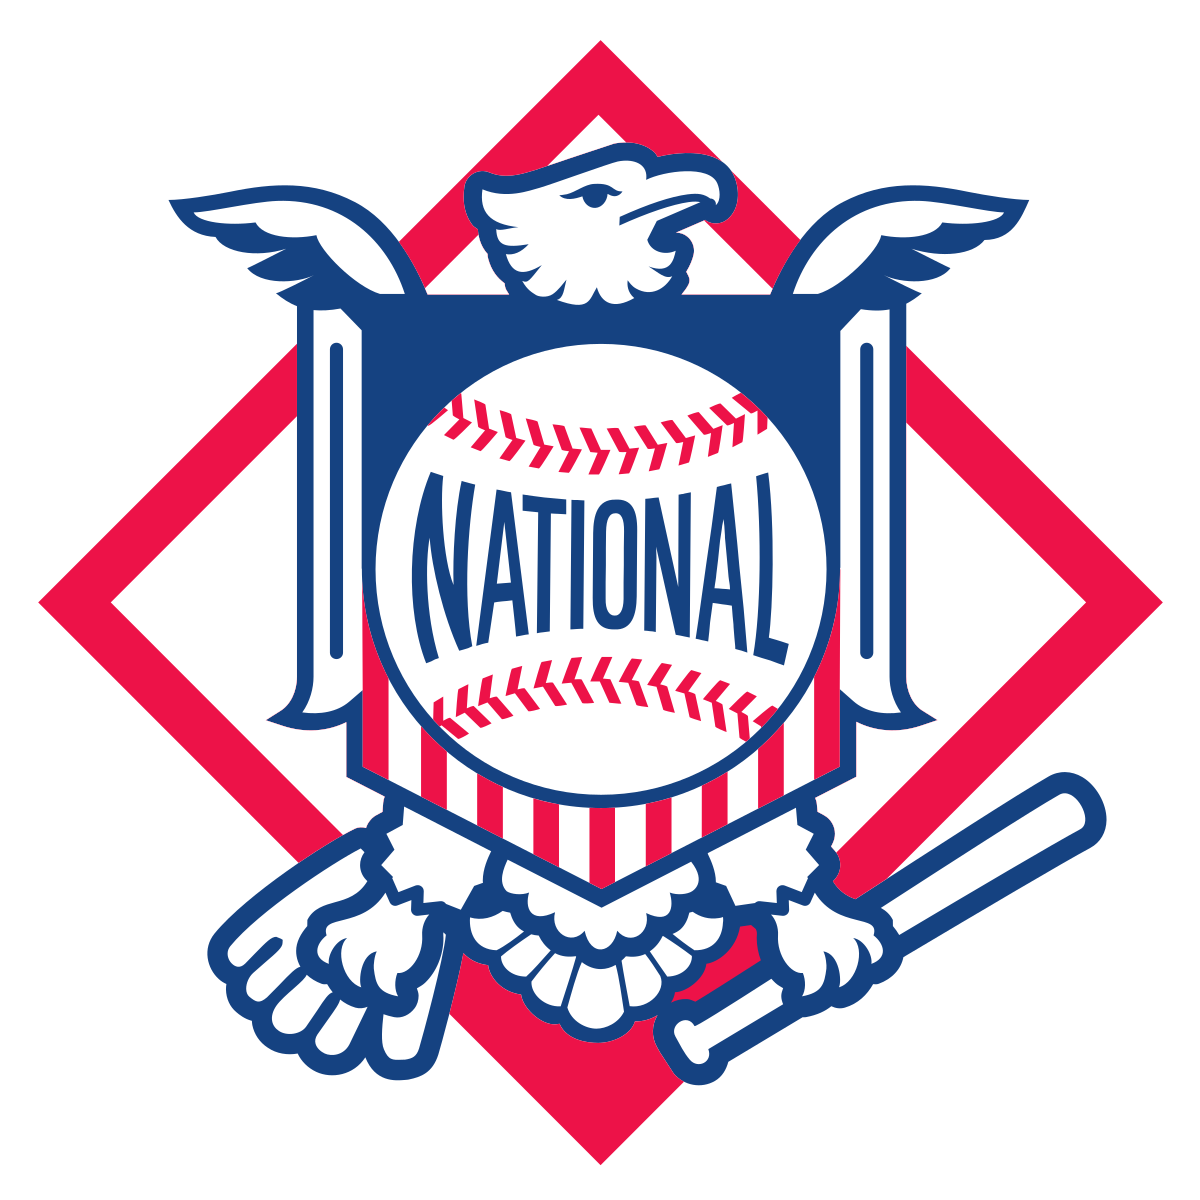 National League - Wikipedia